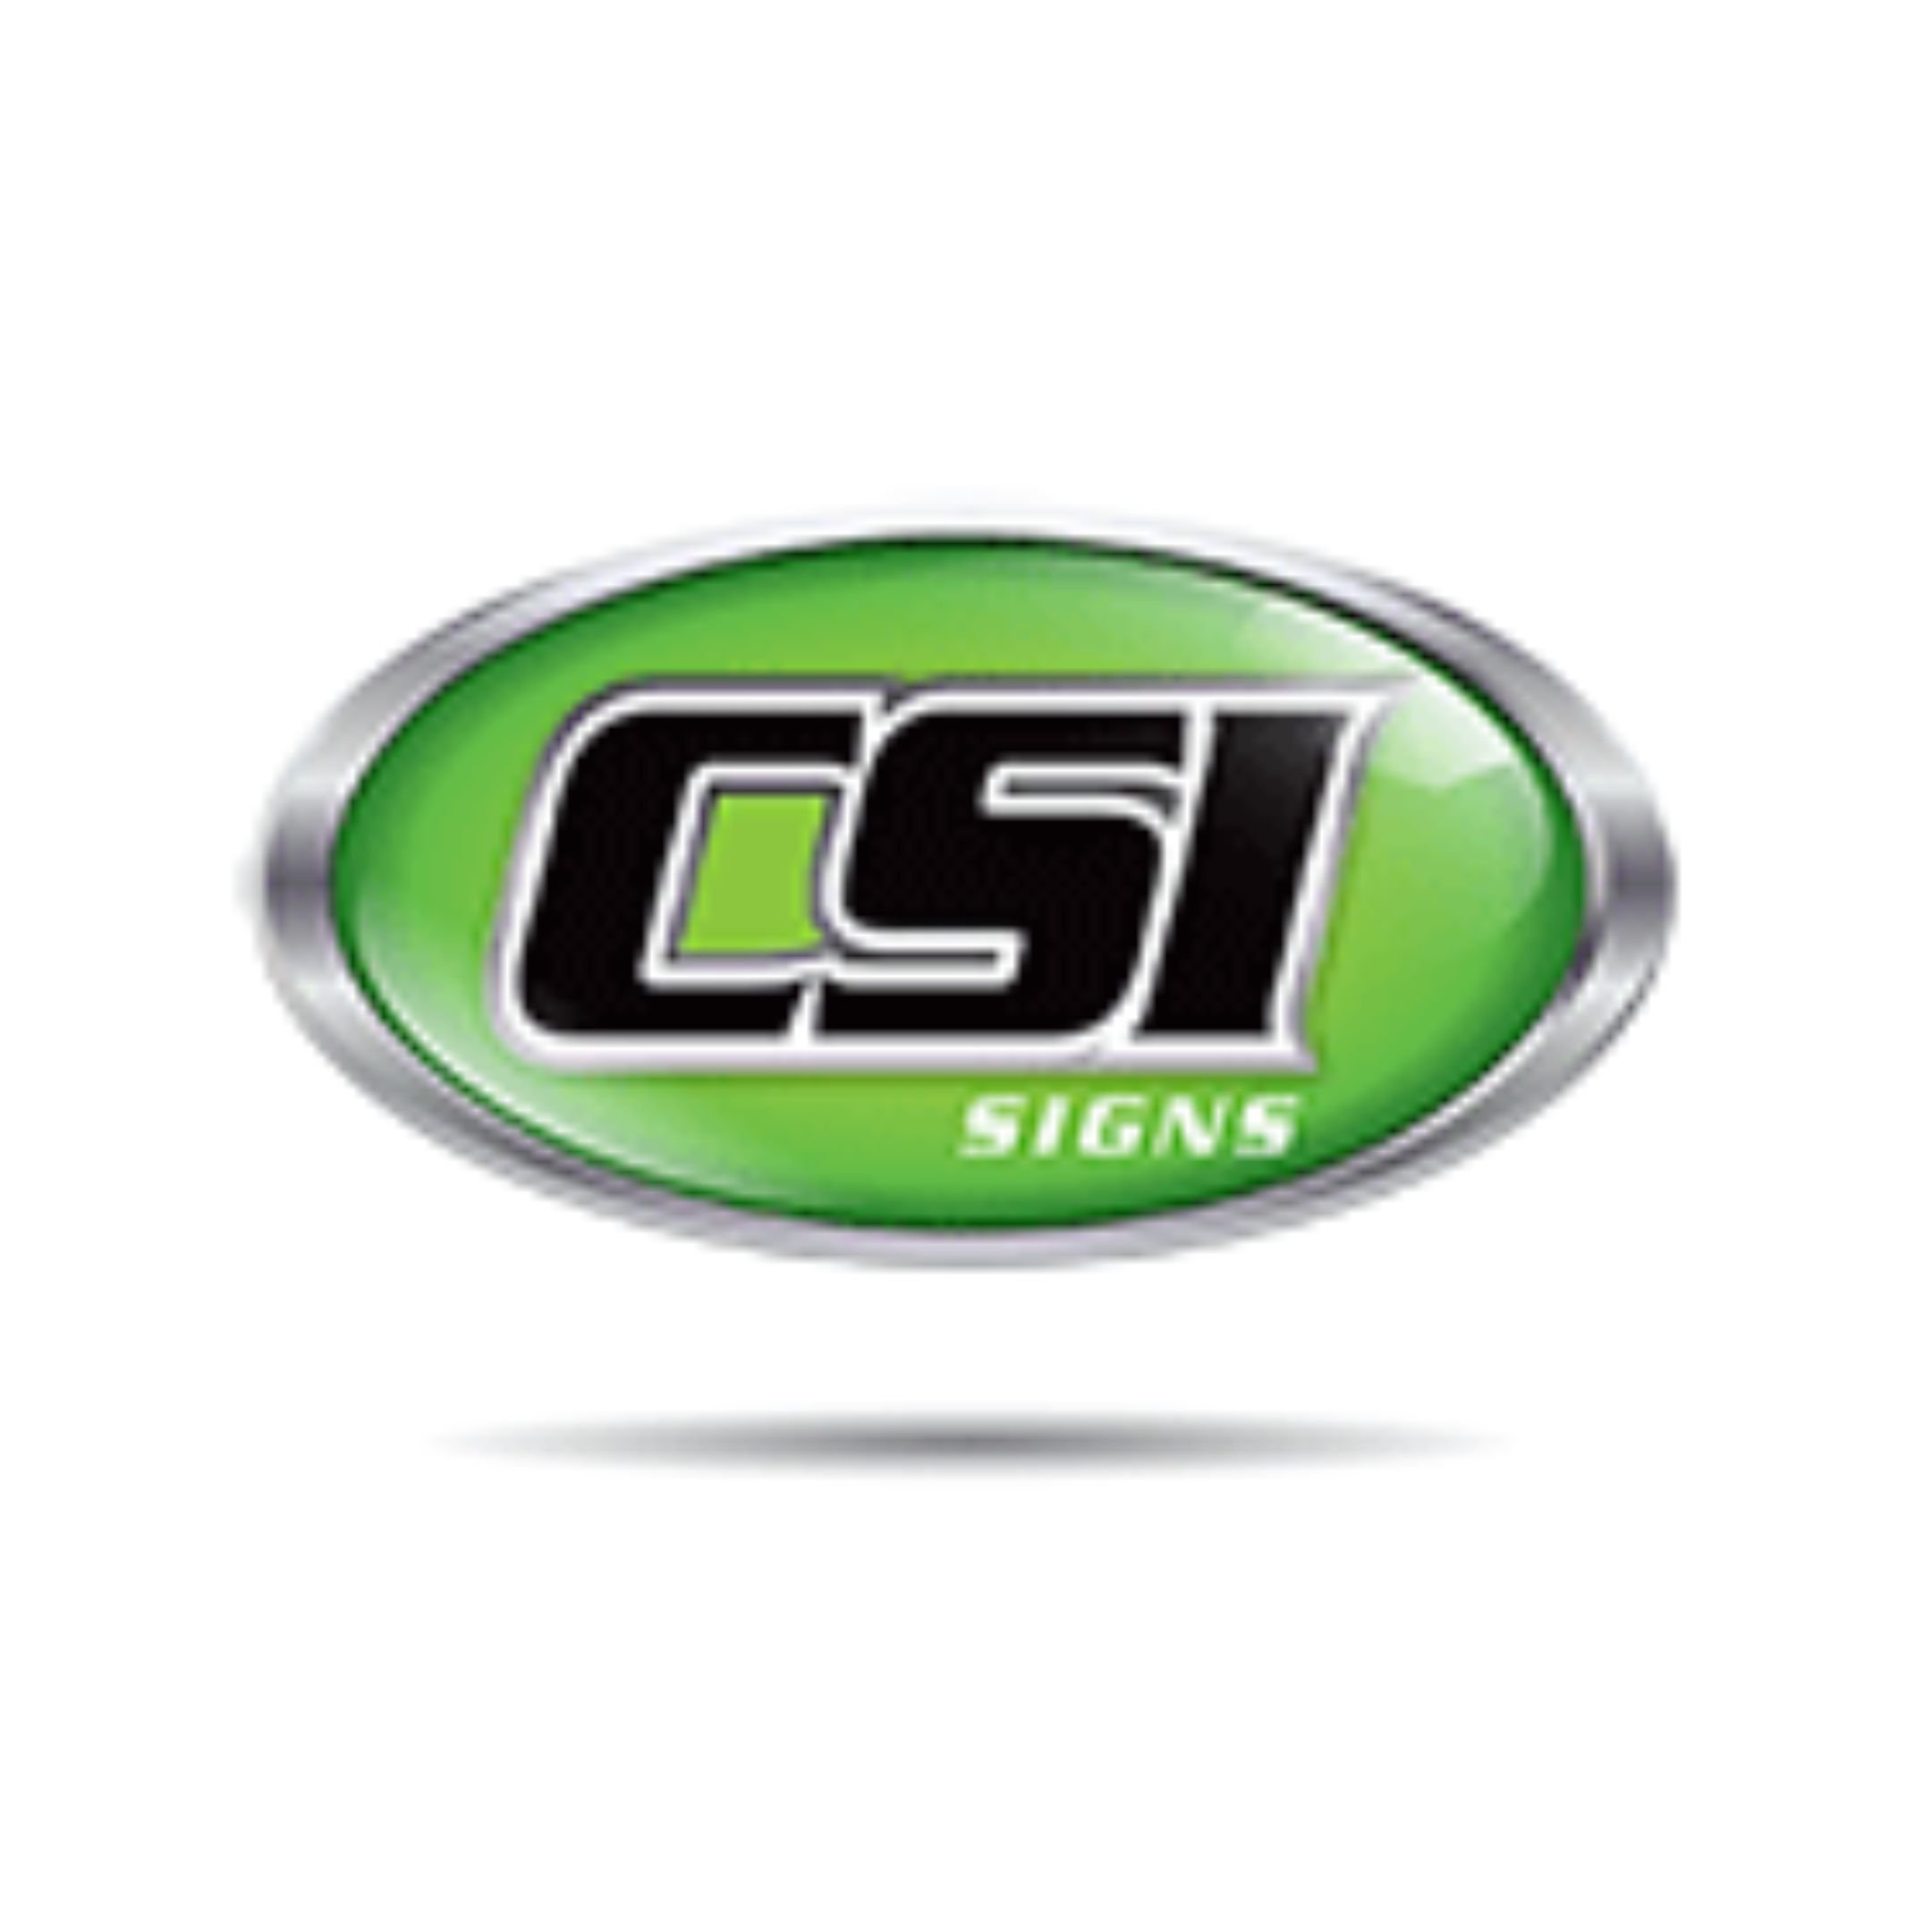 Sponsor Images - CSI Signs.jpg